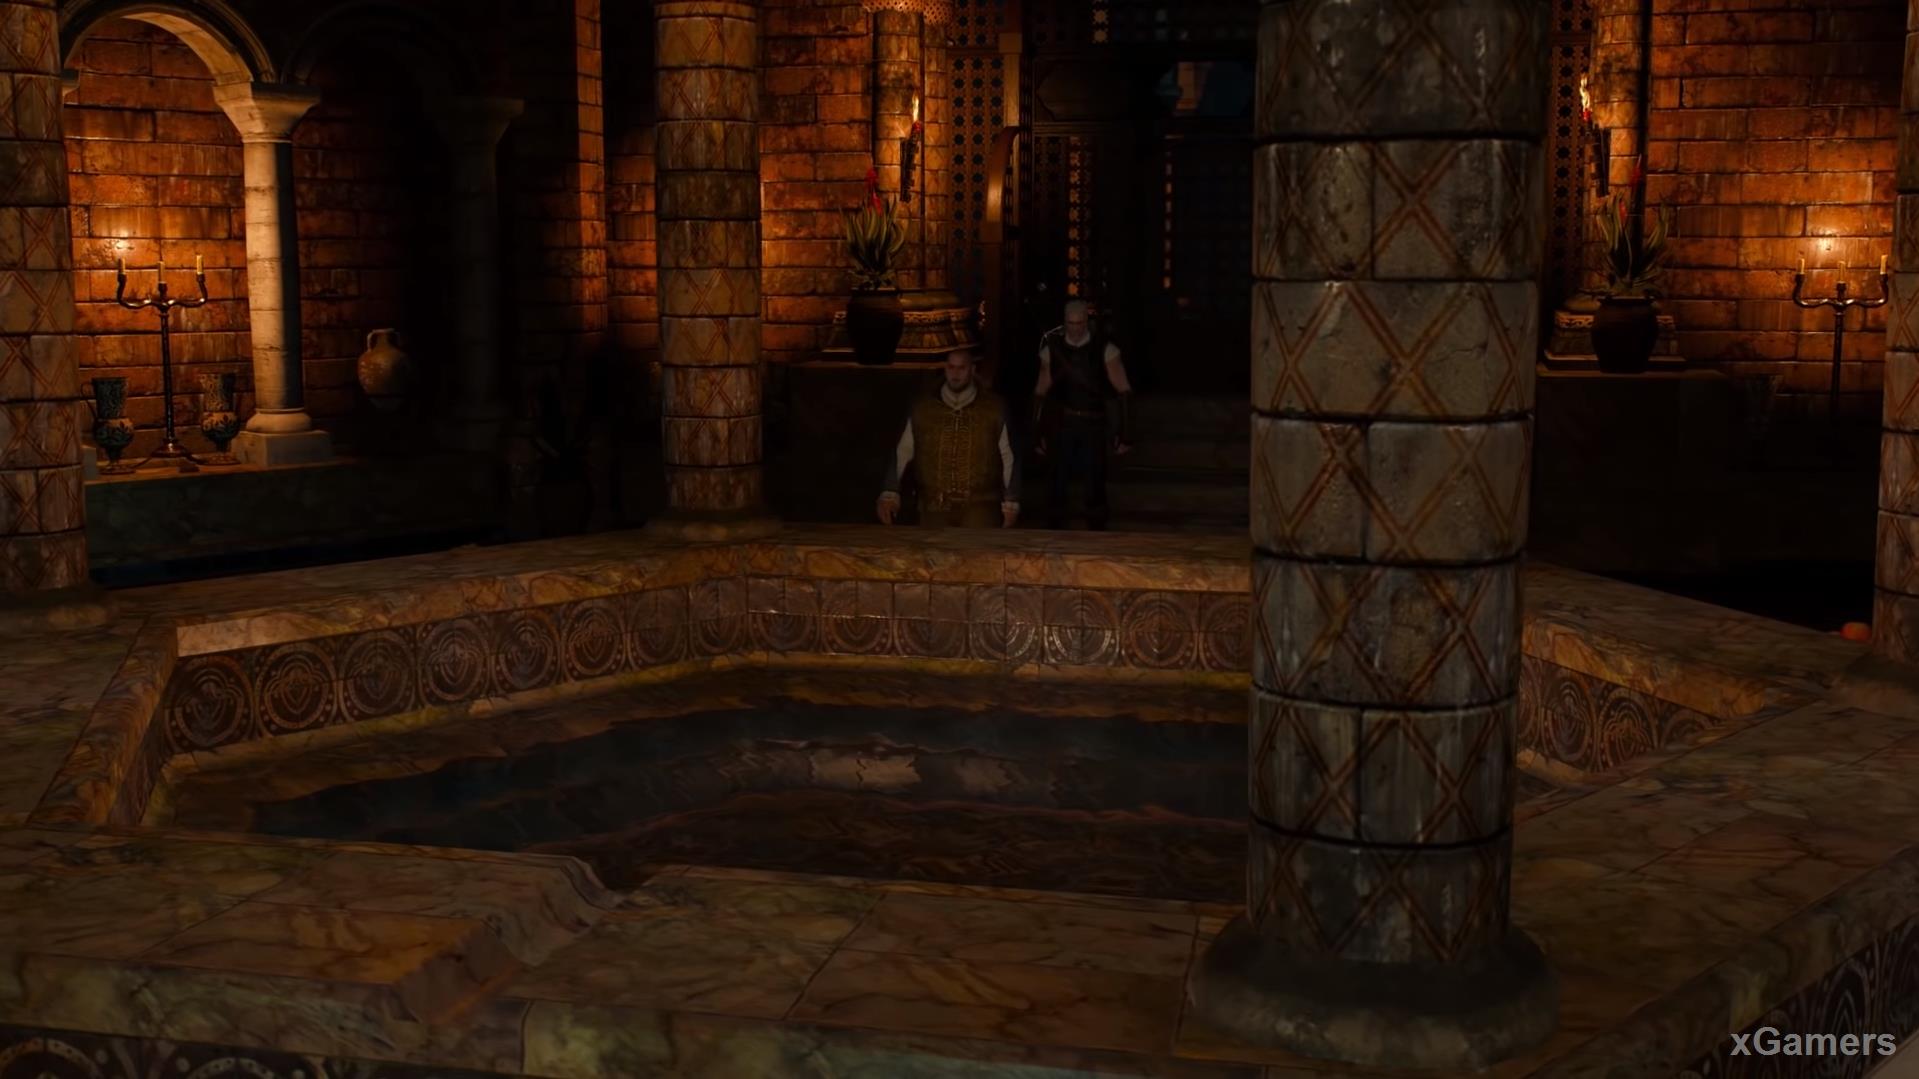 Following Dijkstra into a secret passage, Geralt finds himself in a dungeon